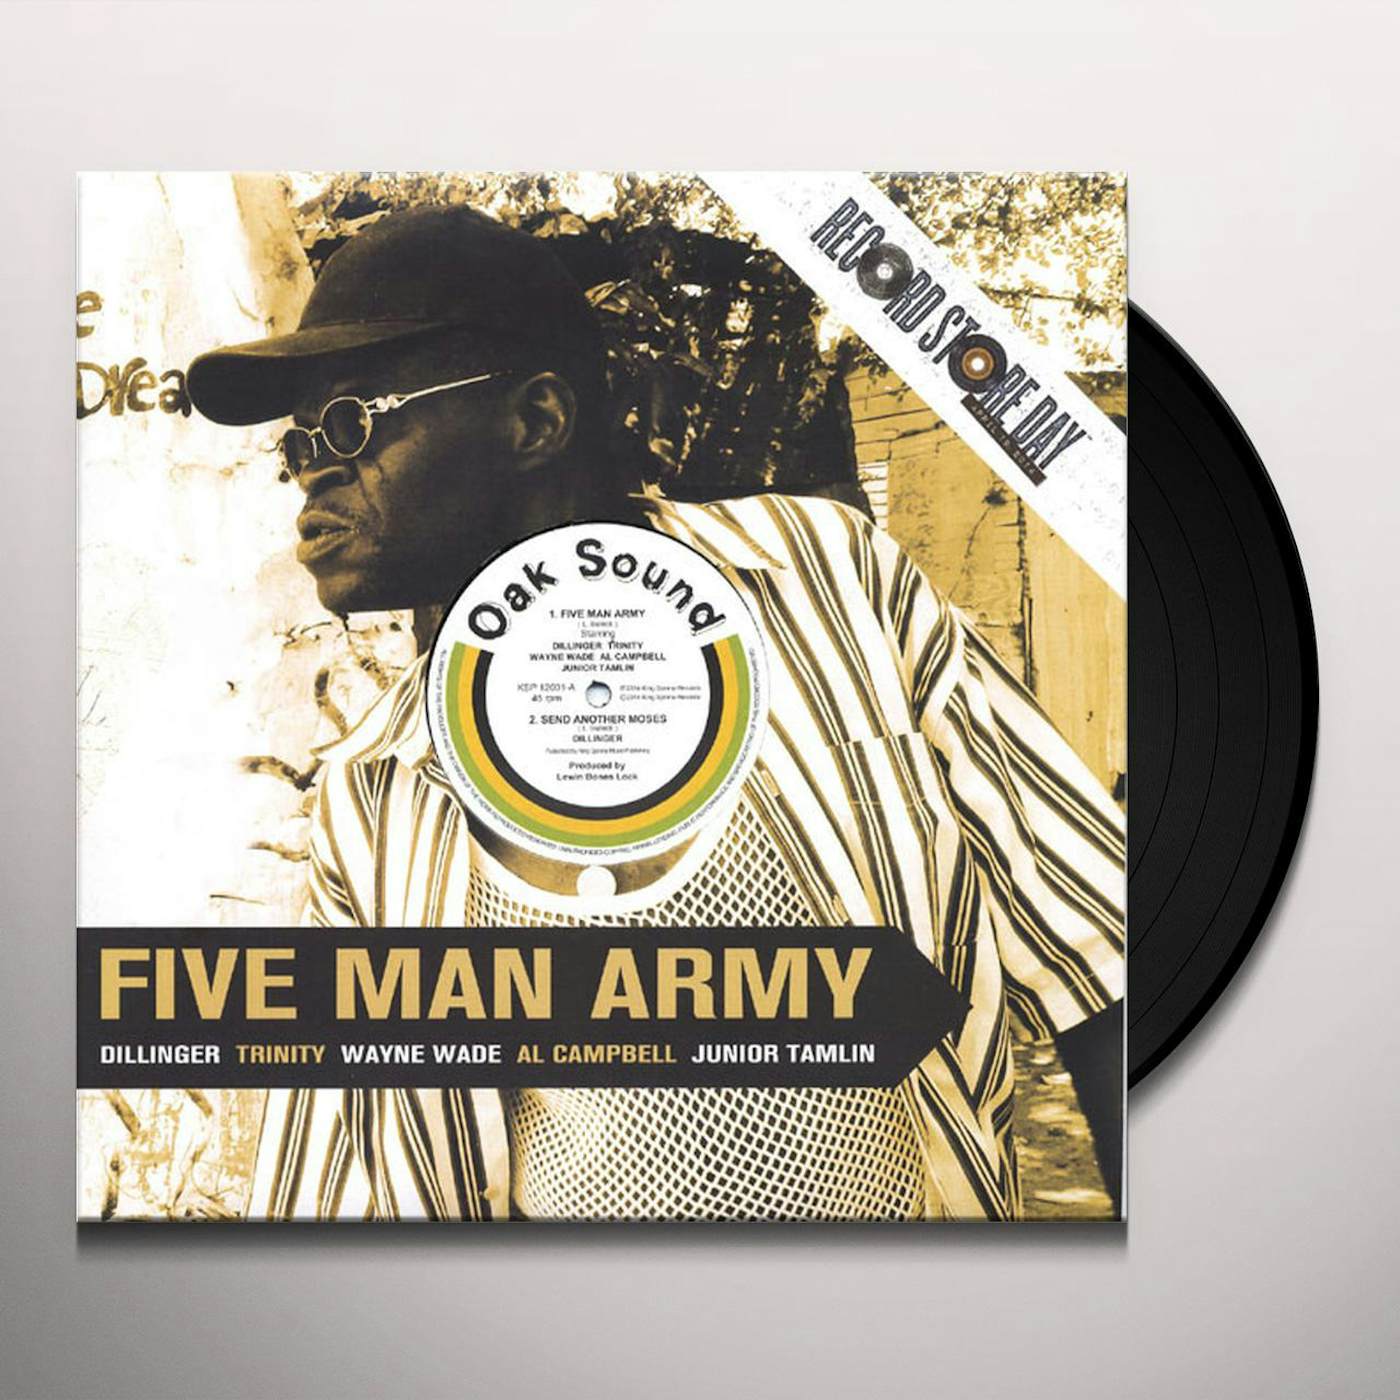 DILLINGER / TRINITY / WAYNE WADE / AL CAMPBELL FIVE MAN ARMY Vinyl Record